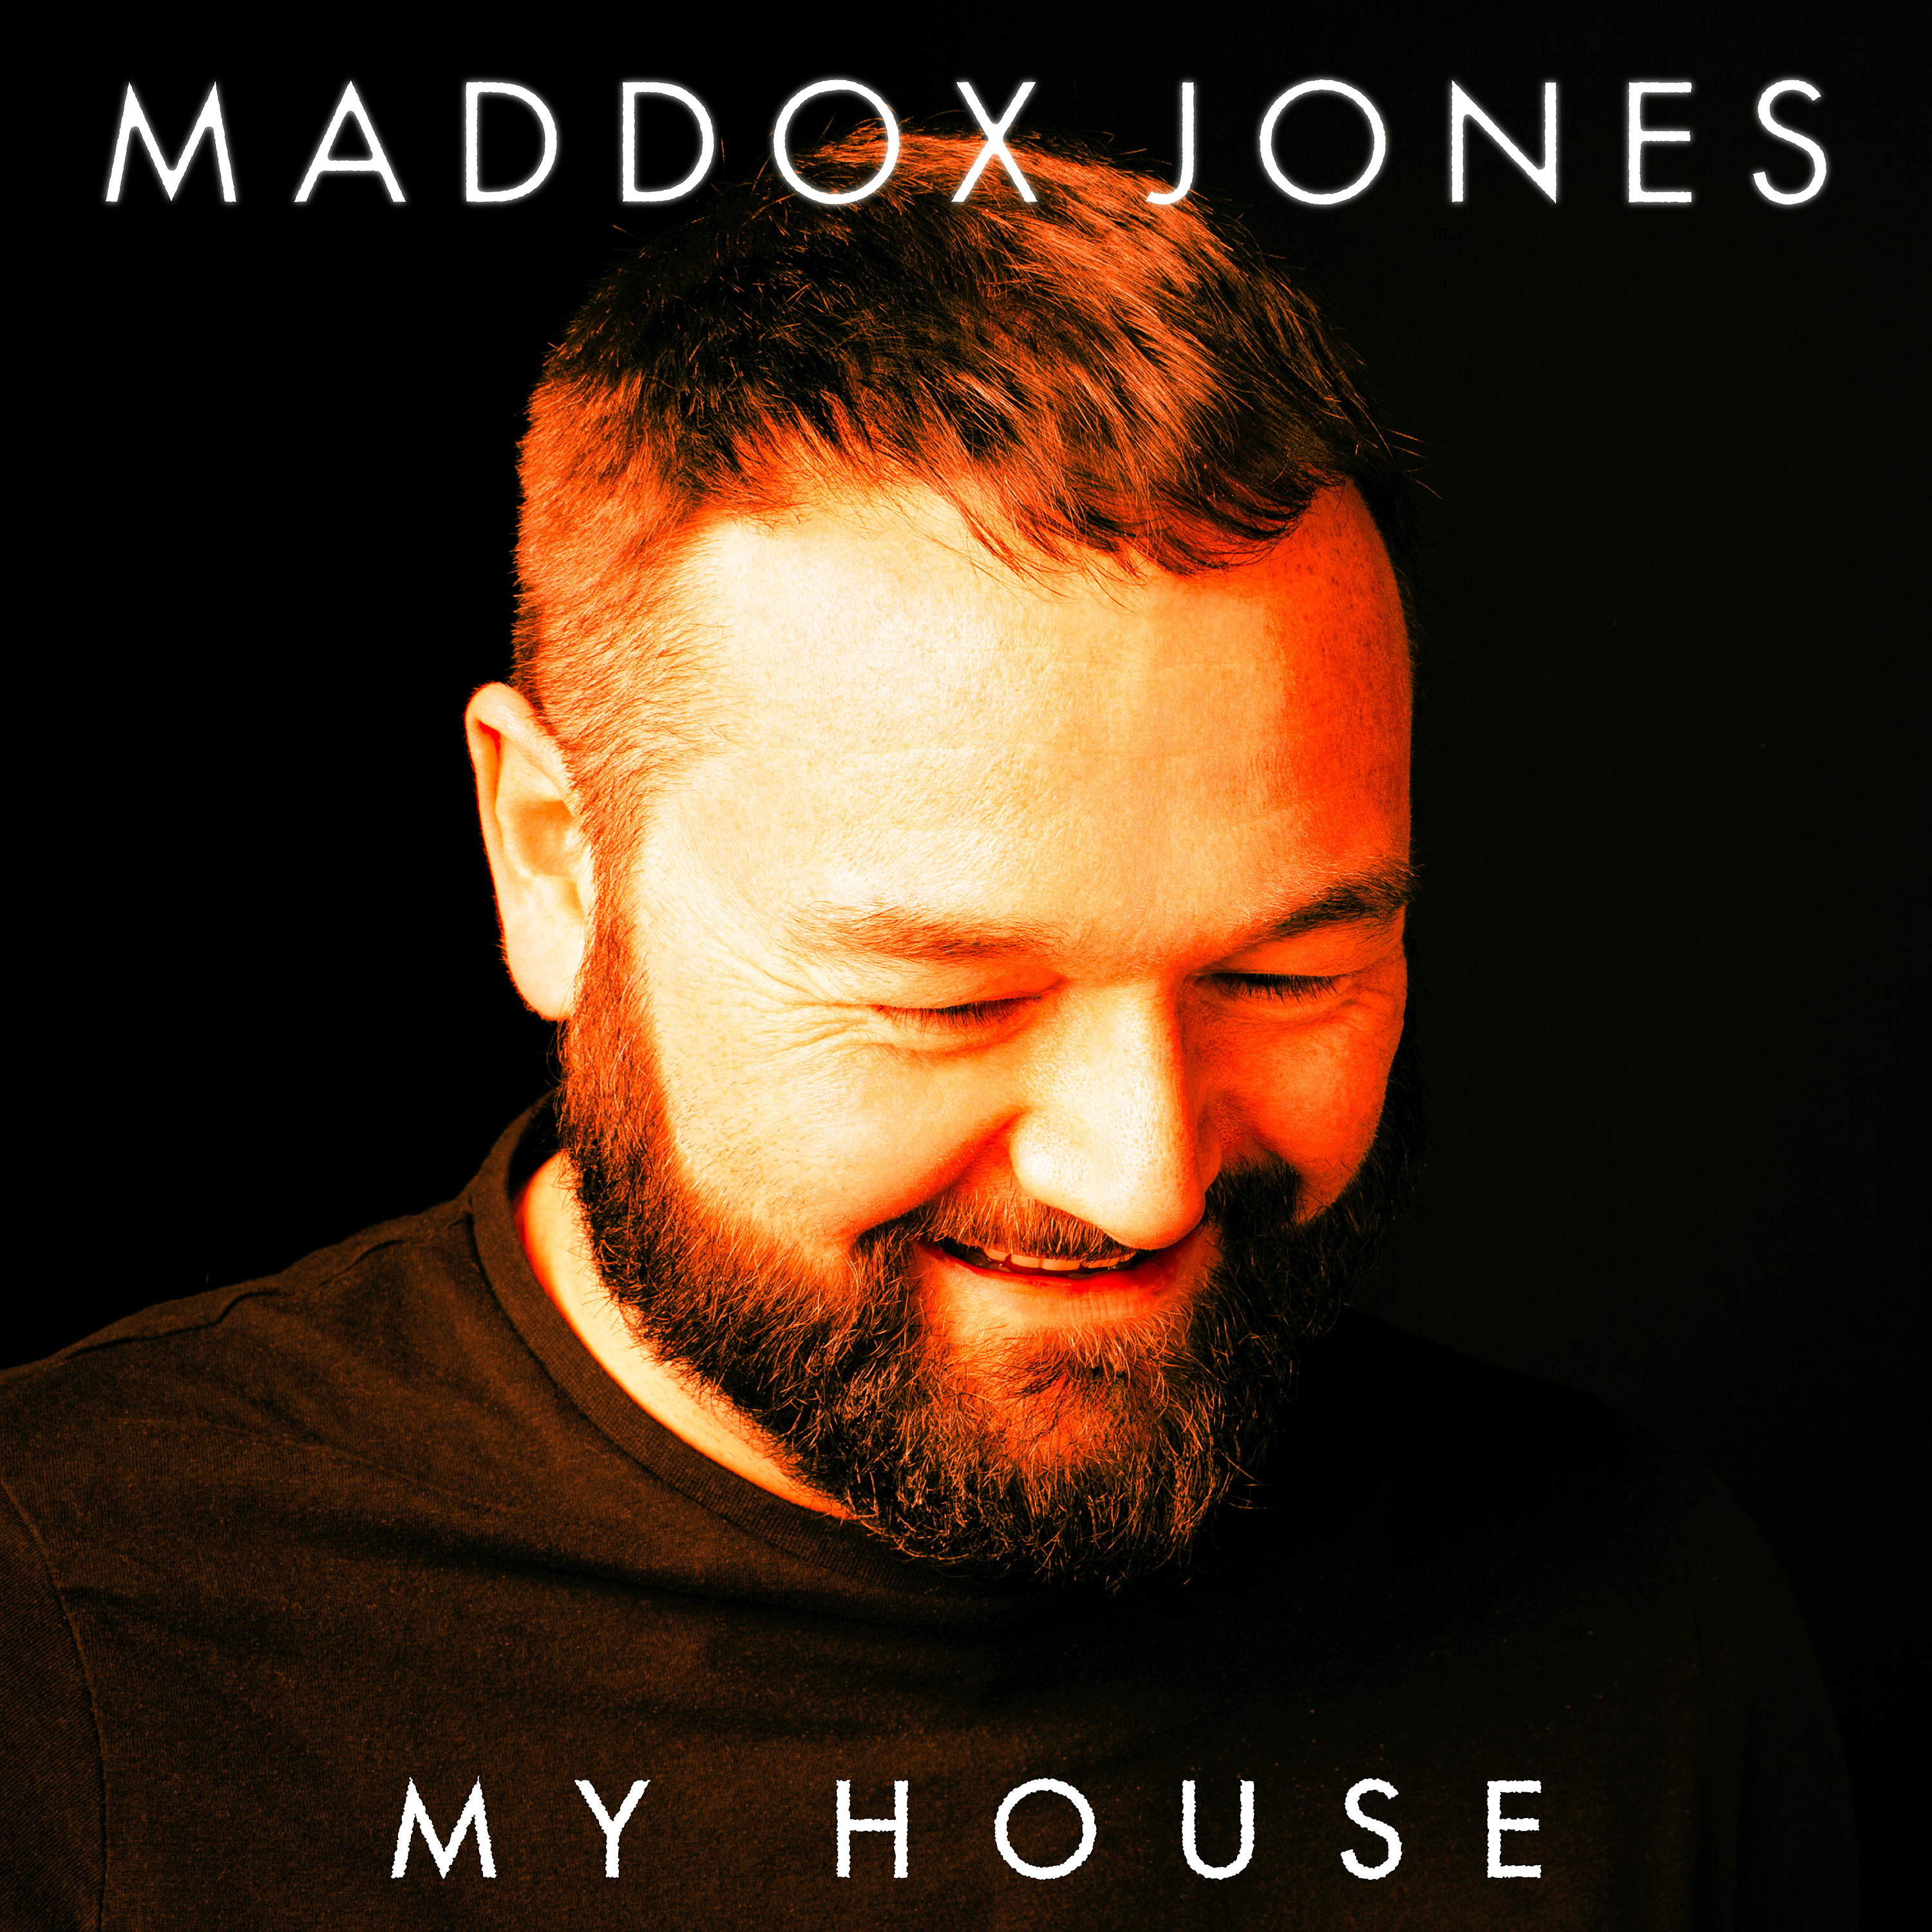 Maddox Jones - My House Single Cover Art